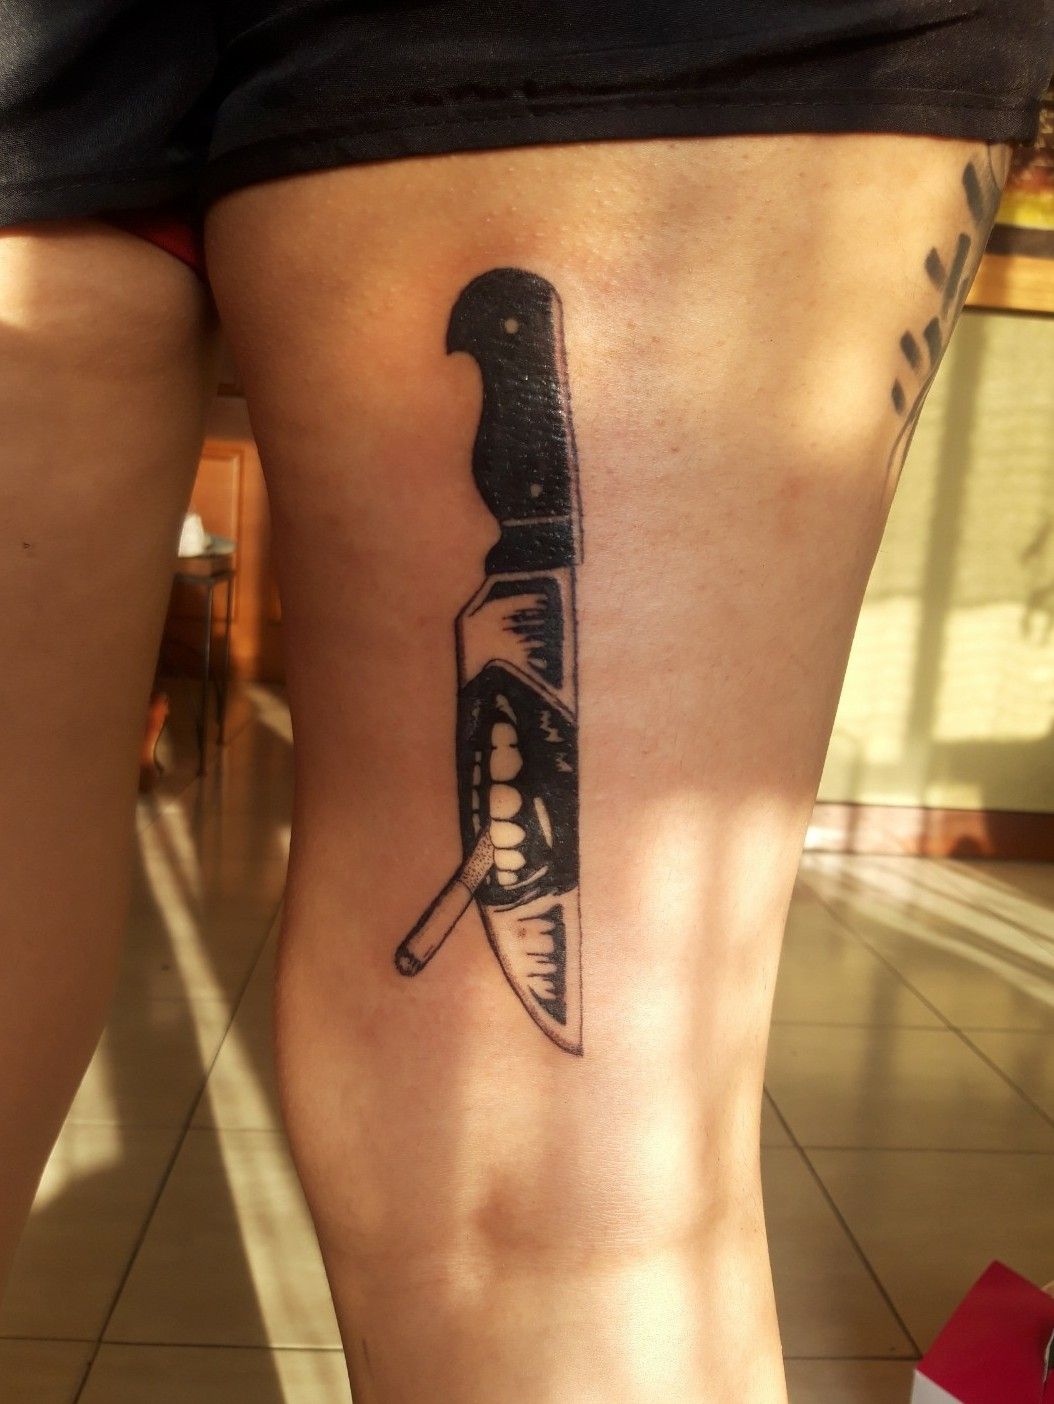 Murder She Wrote Tattoo | Dave Gorman | Flickr